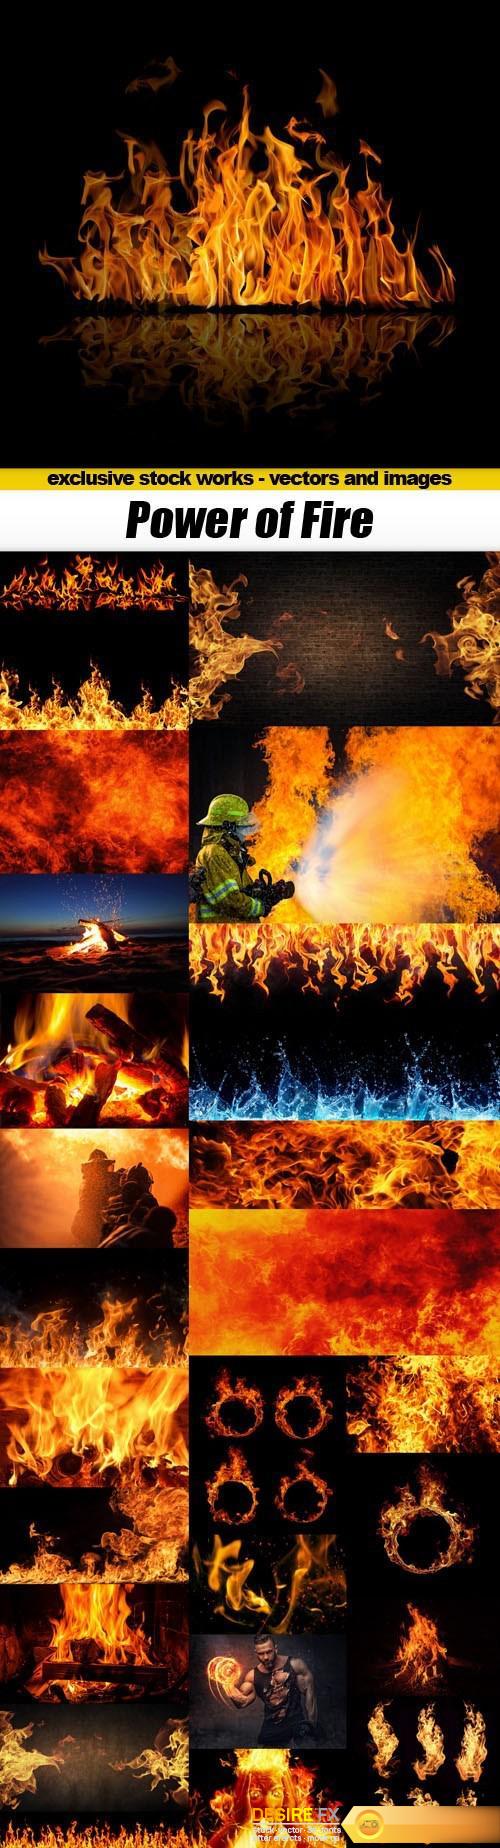 Power of Fire - 26xUHQ JPEG